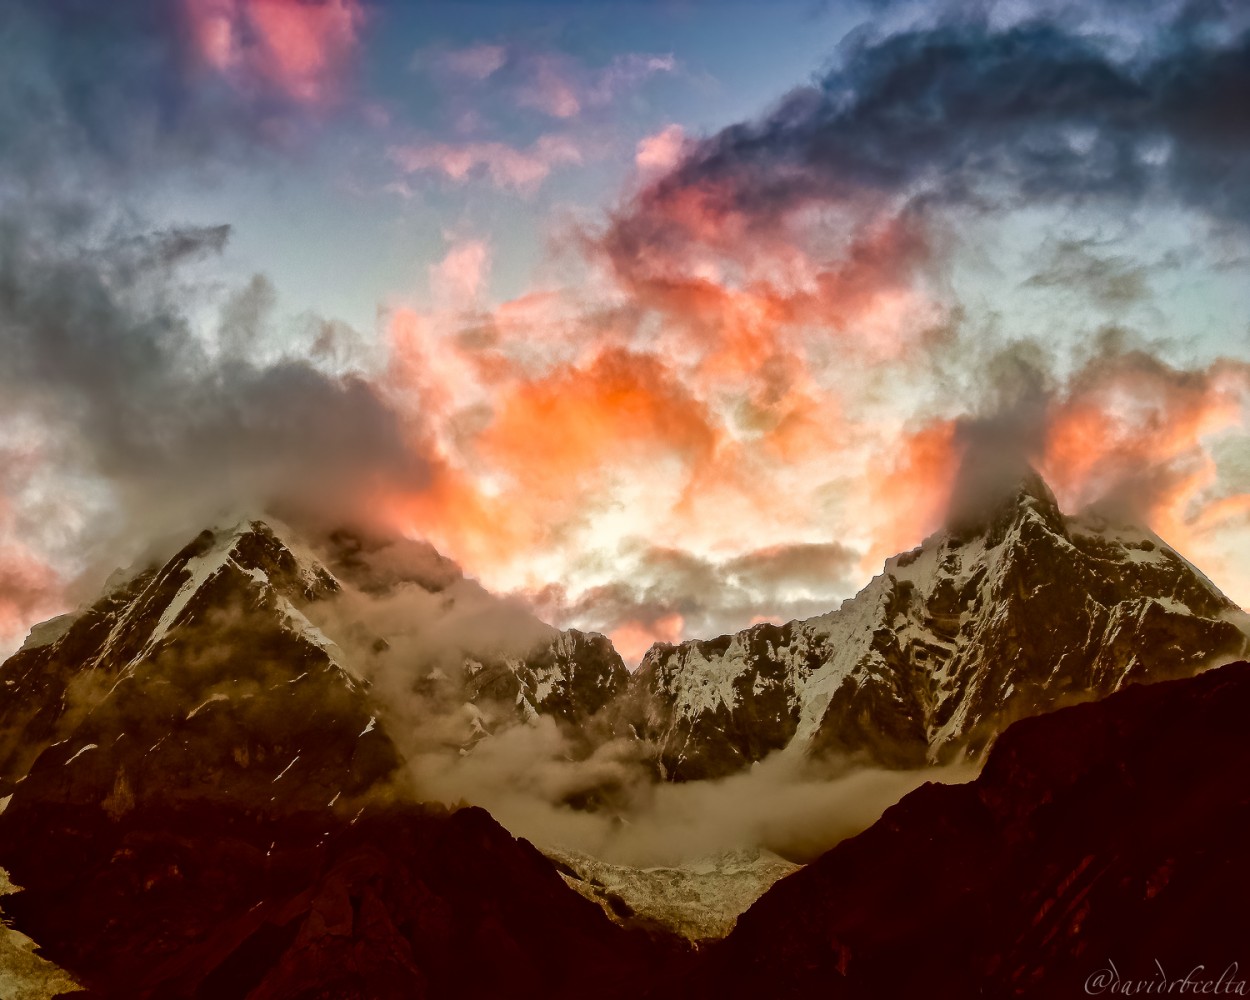 "Cordillera Huayhuash" de David Roldn